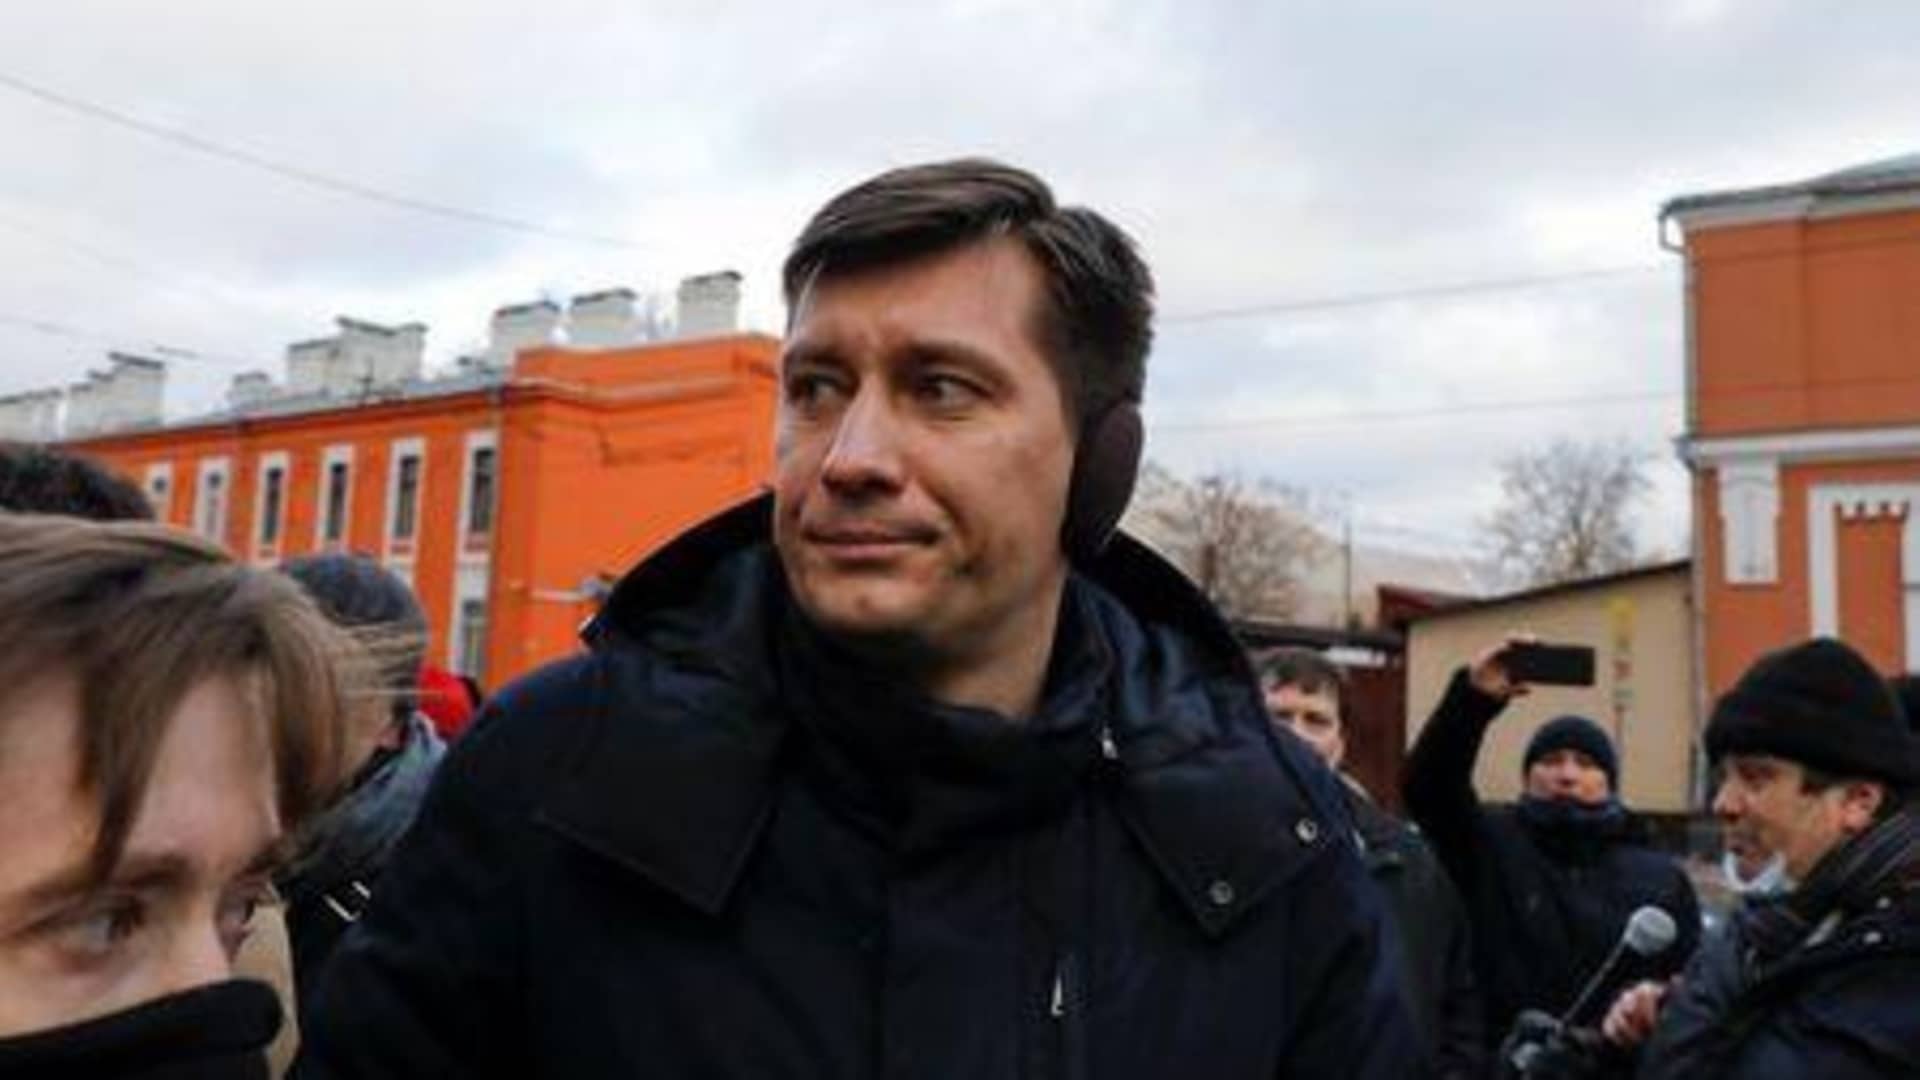 Russia detains opposition politician by suppressing Kremlin critics